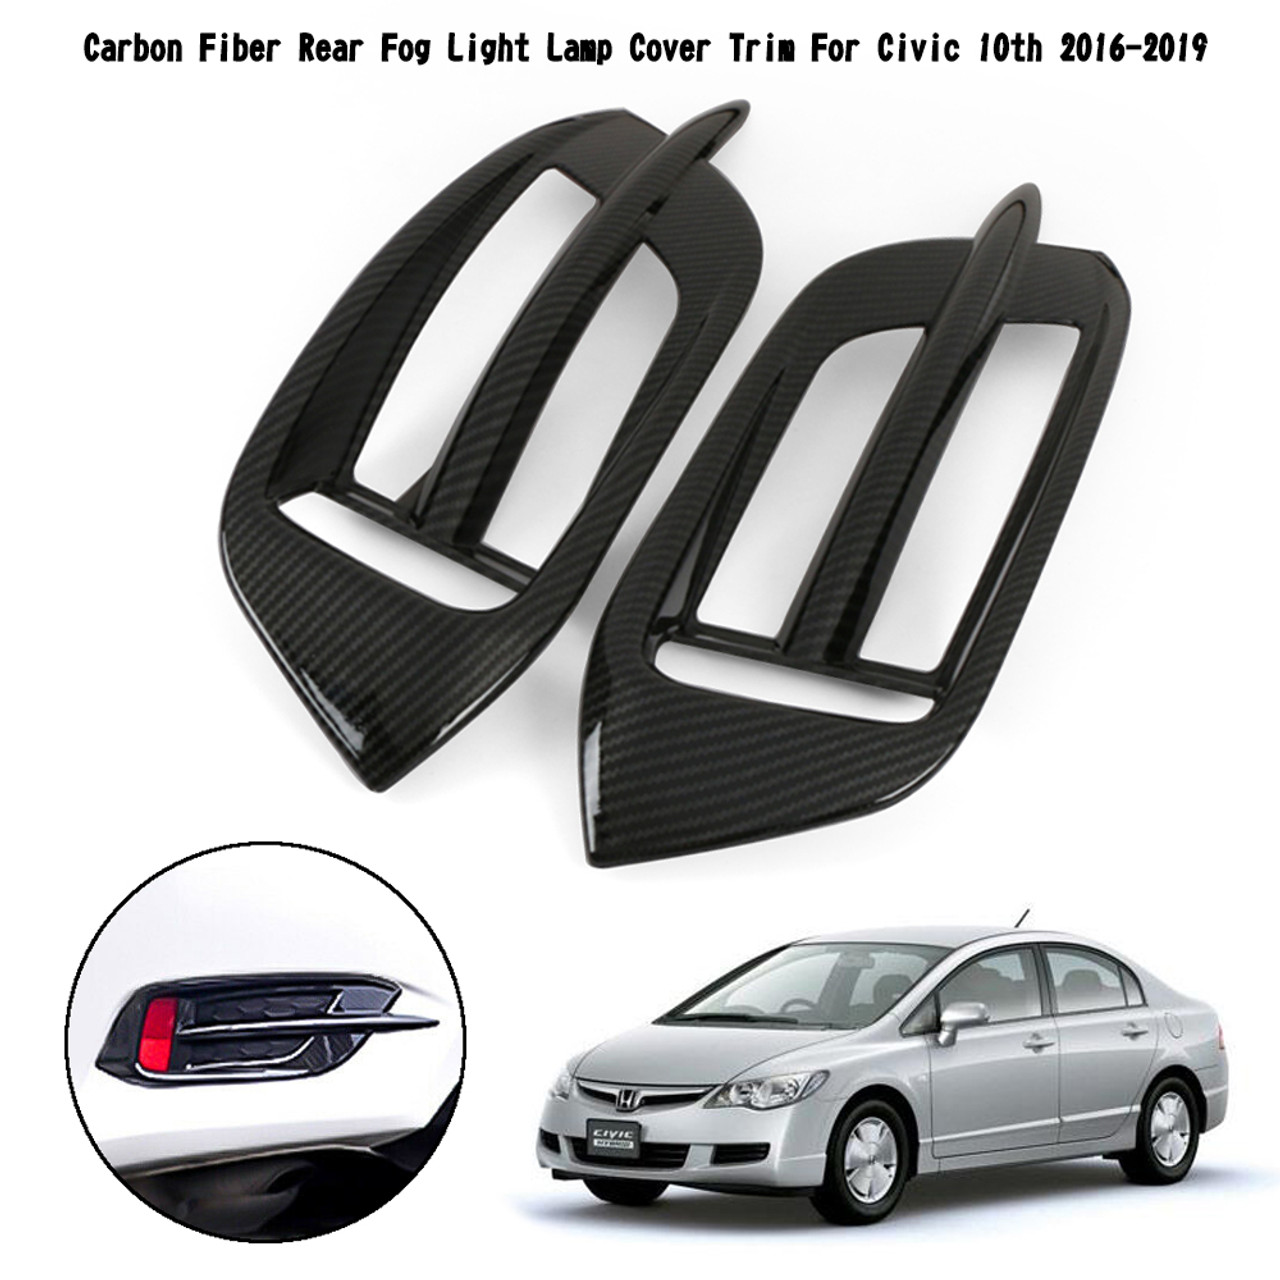 Rear Fog Light Lamp Cover Trim Fit for Honda Civic 10th 2016-2019 Carbon Fiber